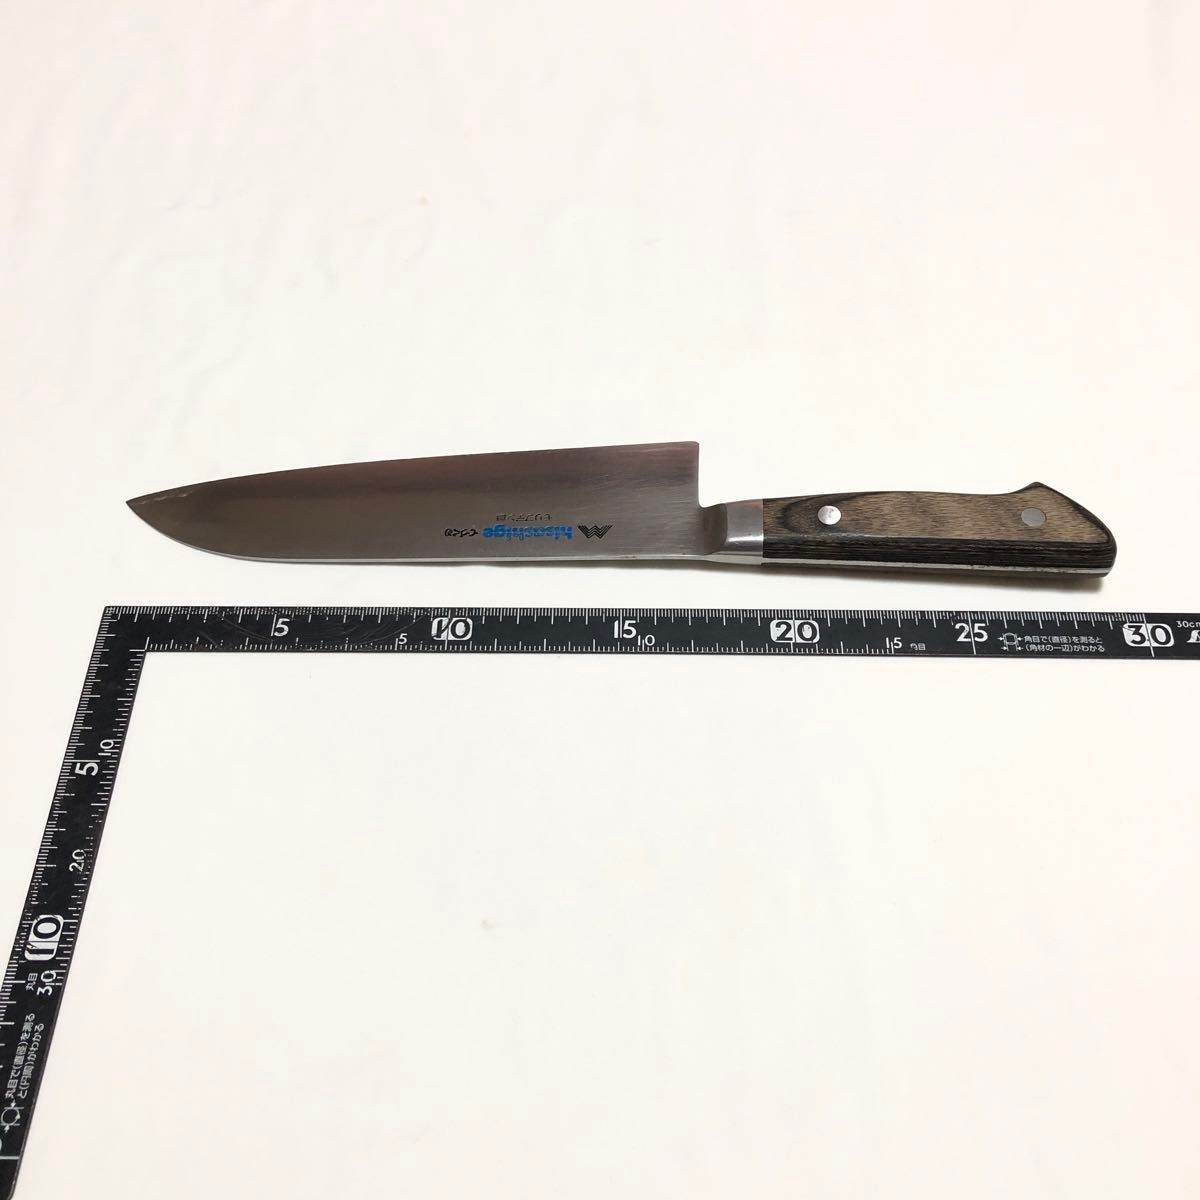 S10-9  三徳包丁 万能包丁 hisashige モリブデン鋼  庖丁 調理器具 Japanese knife 刃物